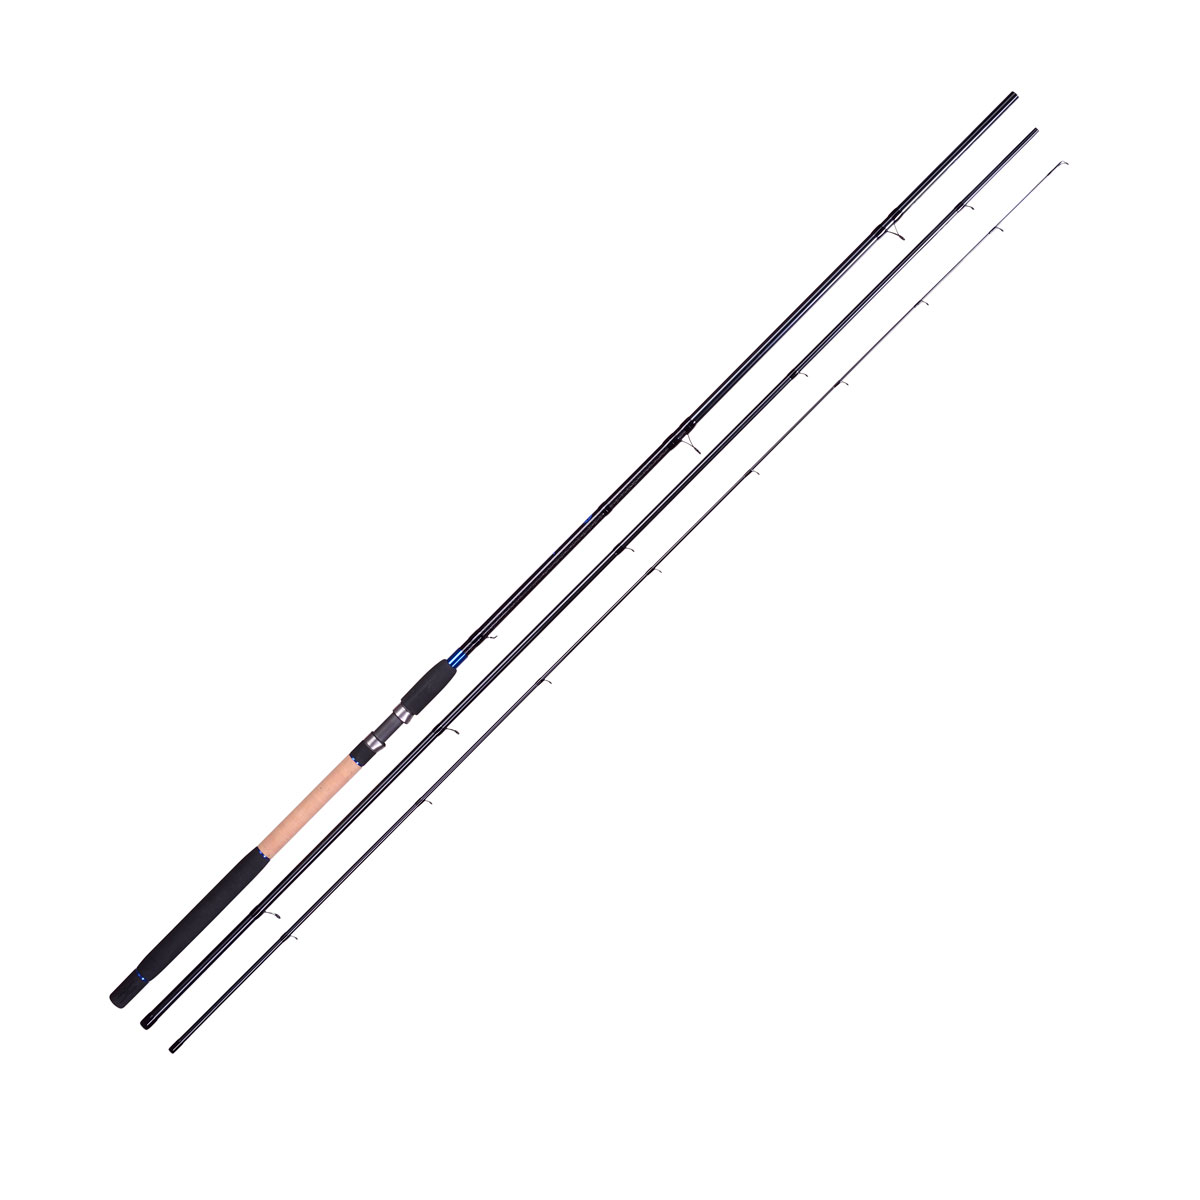 Cadence CR10 15ft Match Rod